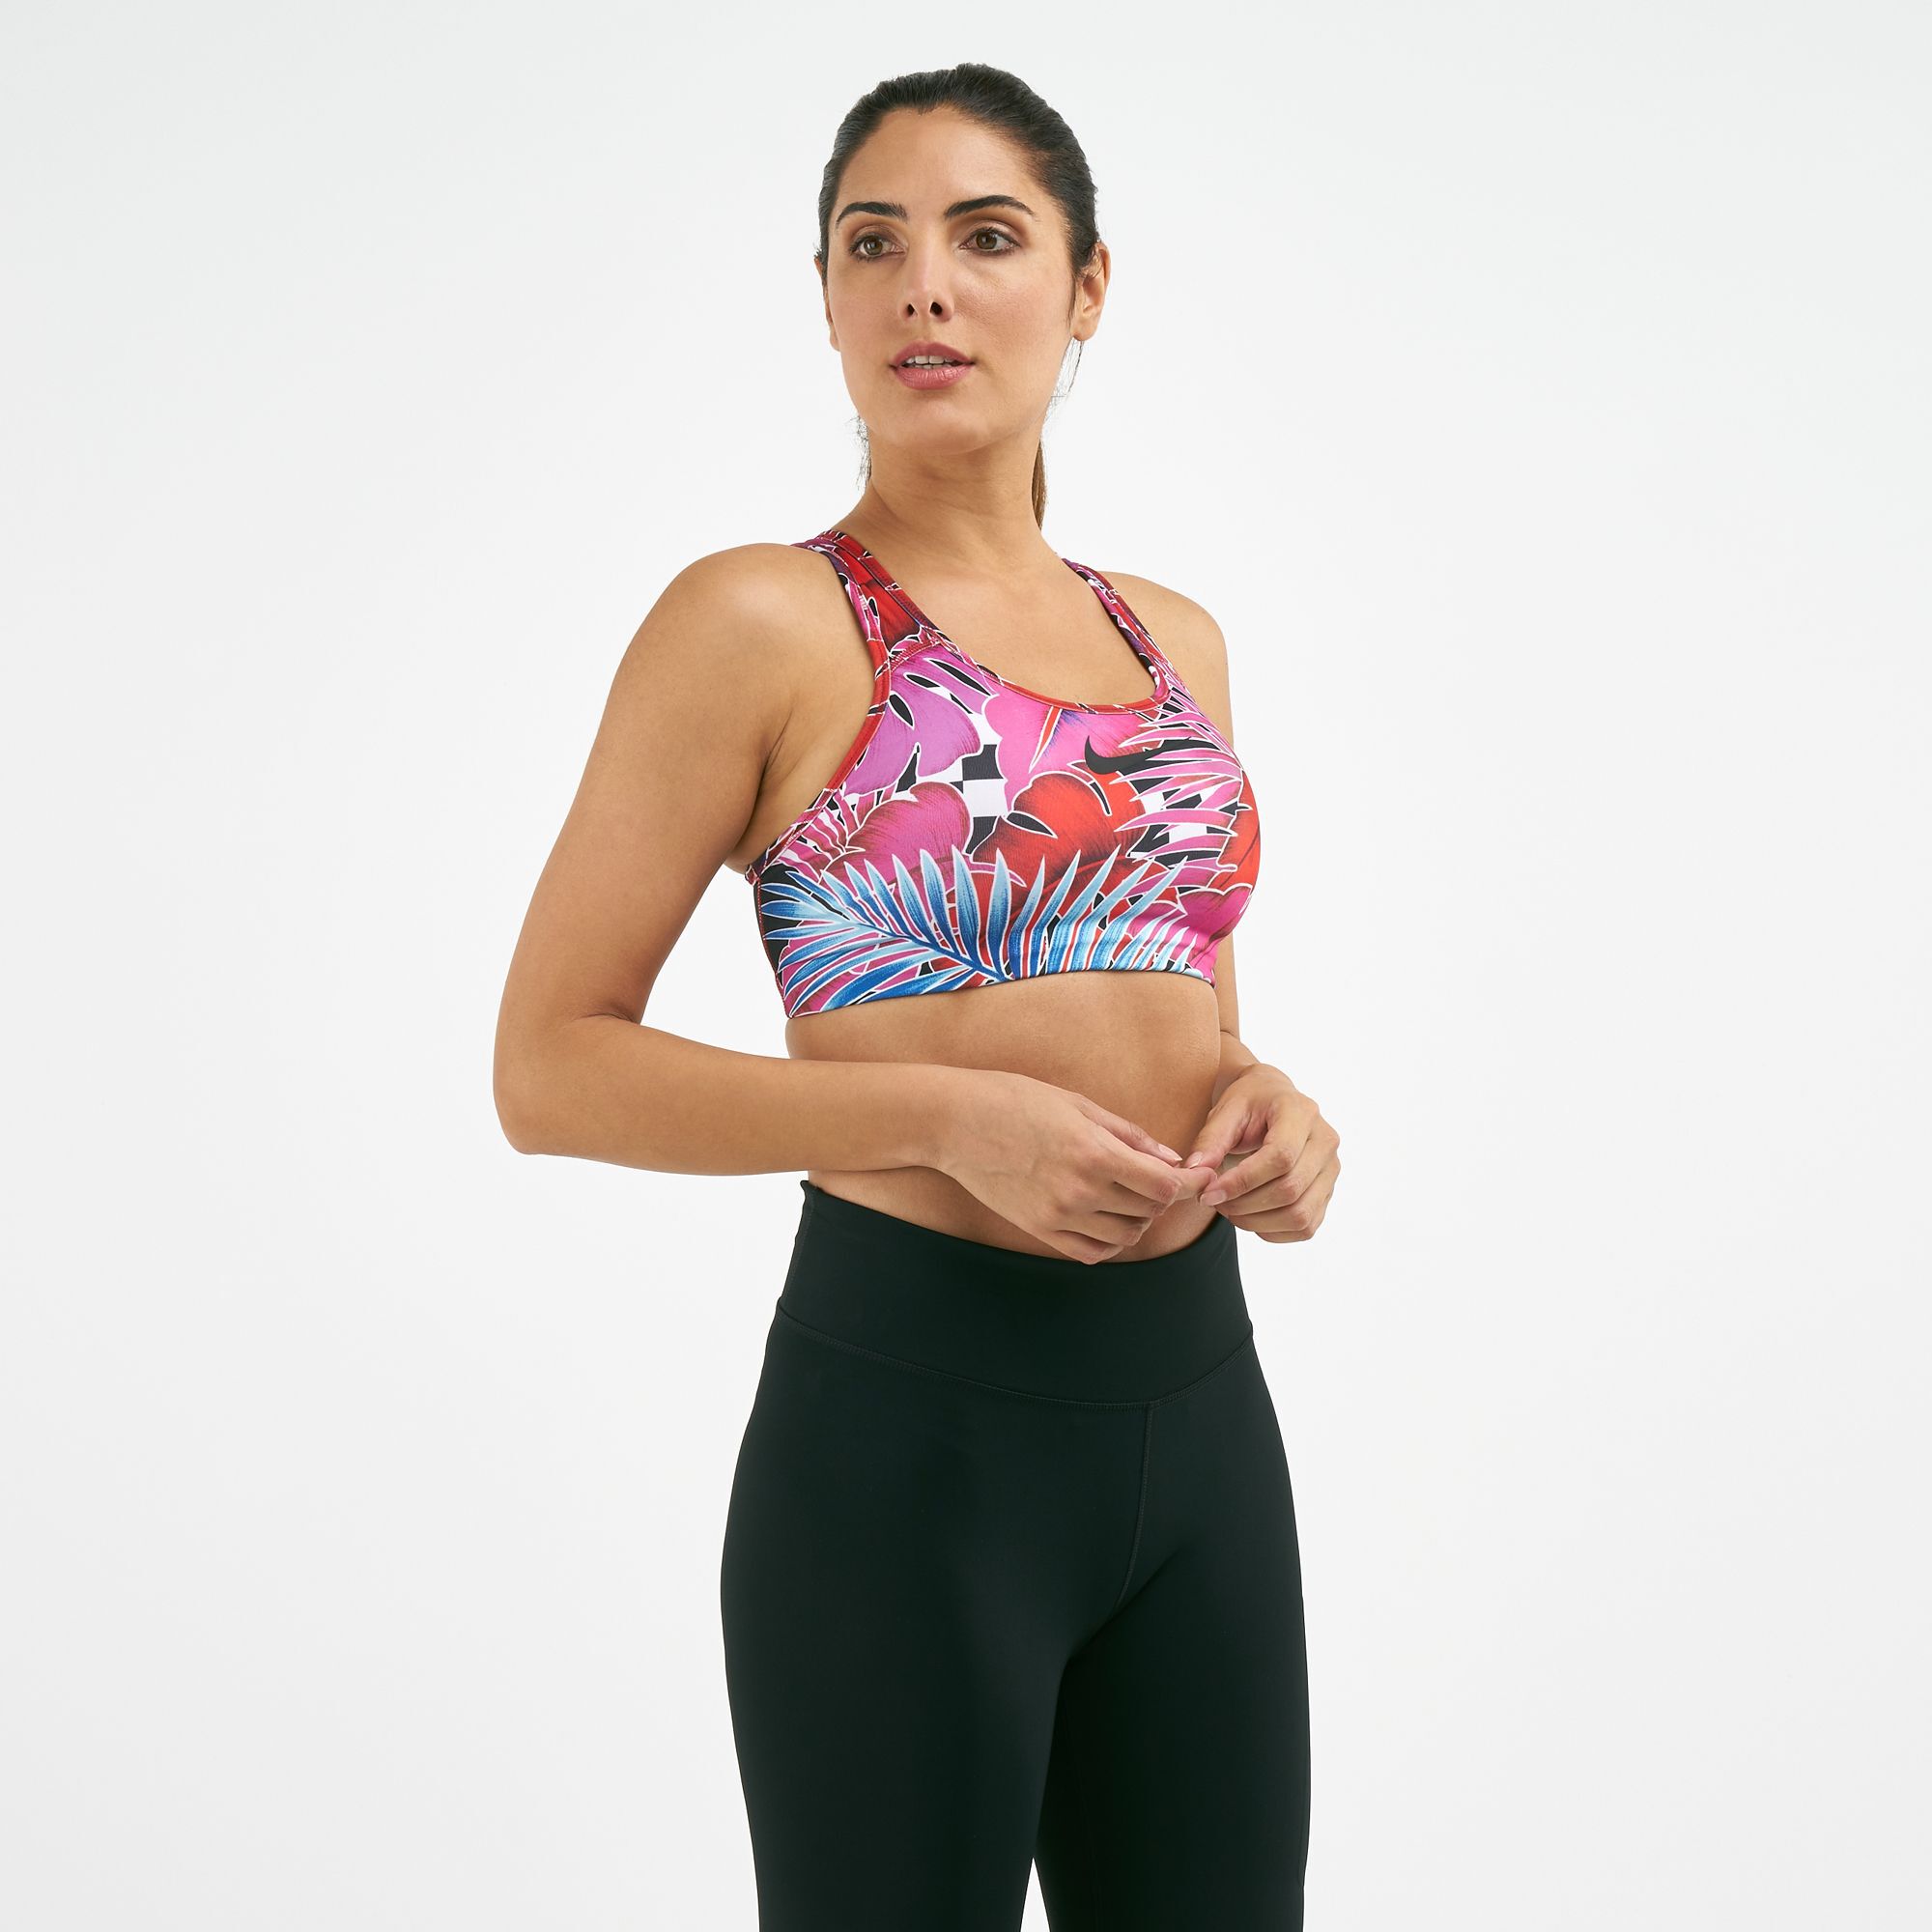 Nike Training Swoosh Dri-FIT medium support sports bra in grey